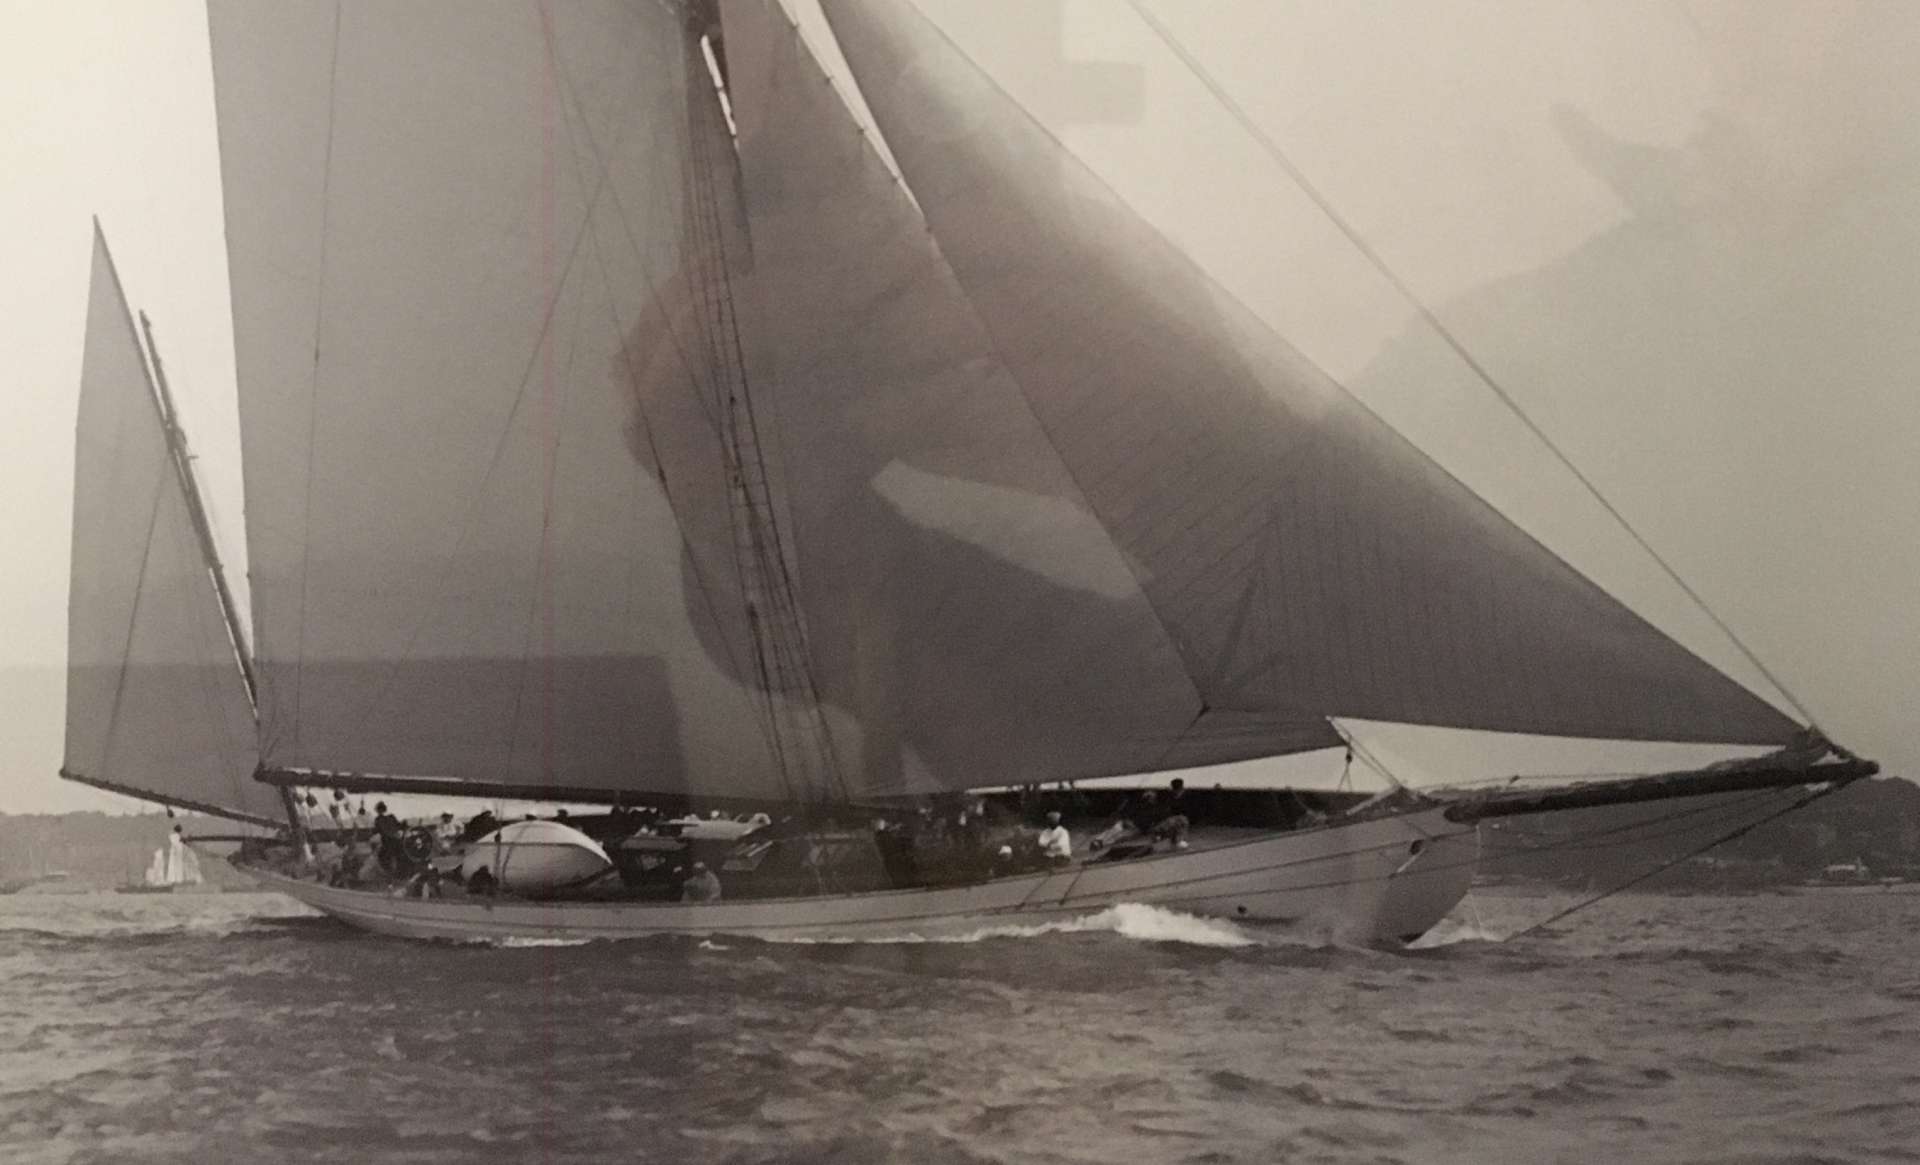 BLACK SWAN Yacht Charter - Bekens photo - original rig 1899